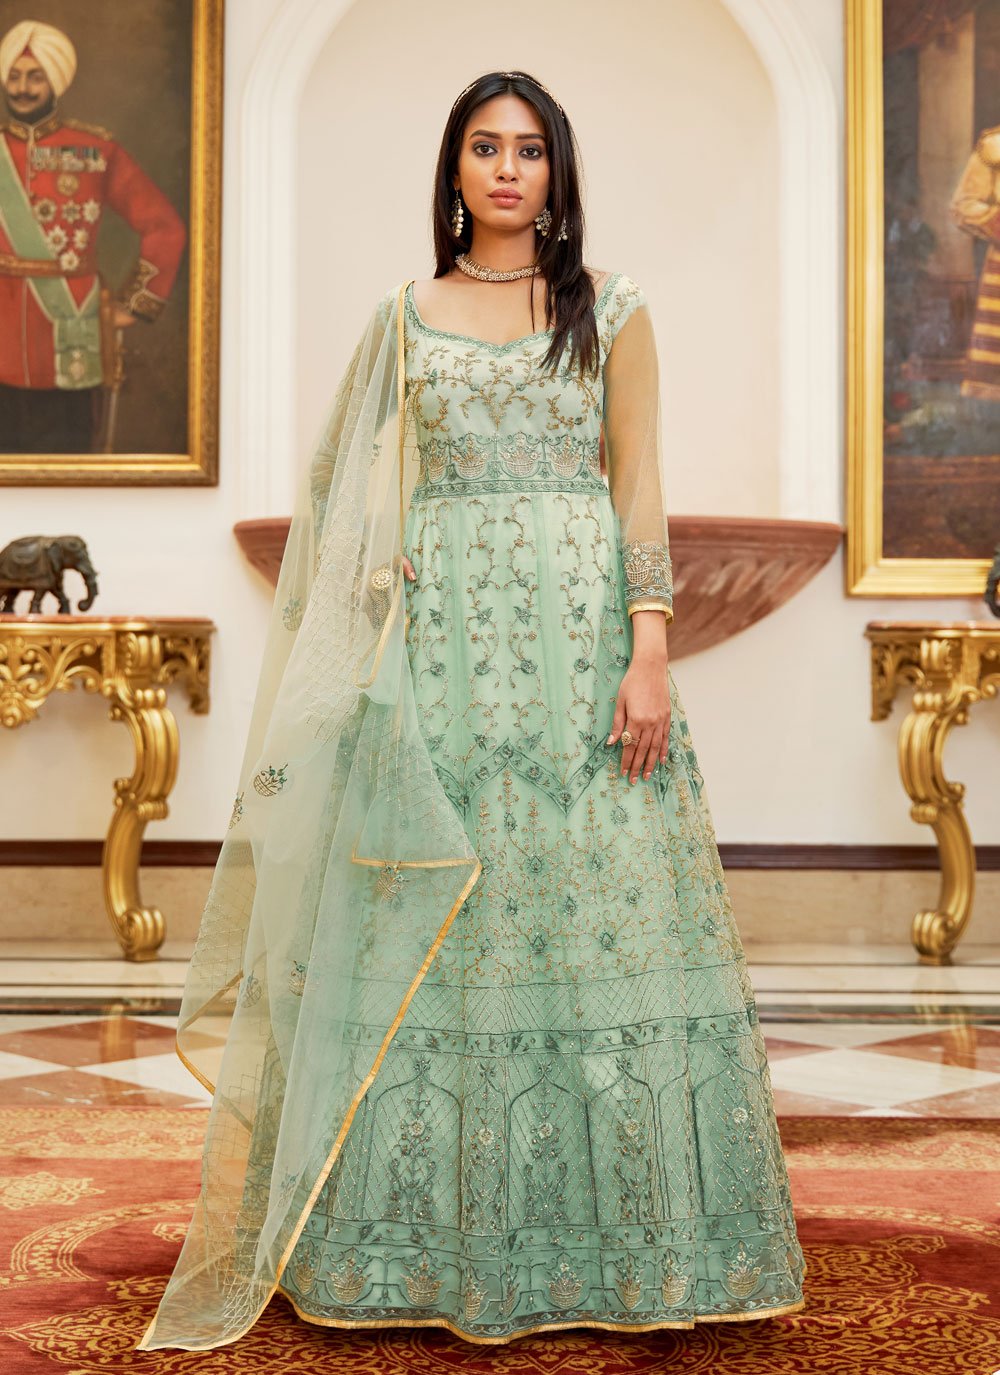 Jugani By Eba Designer Heavy Wedding Salwar Suit D.No. 1605